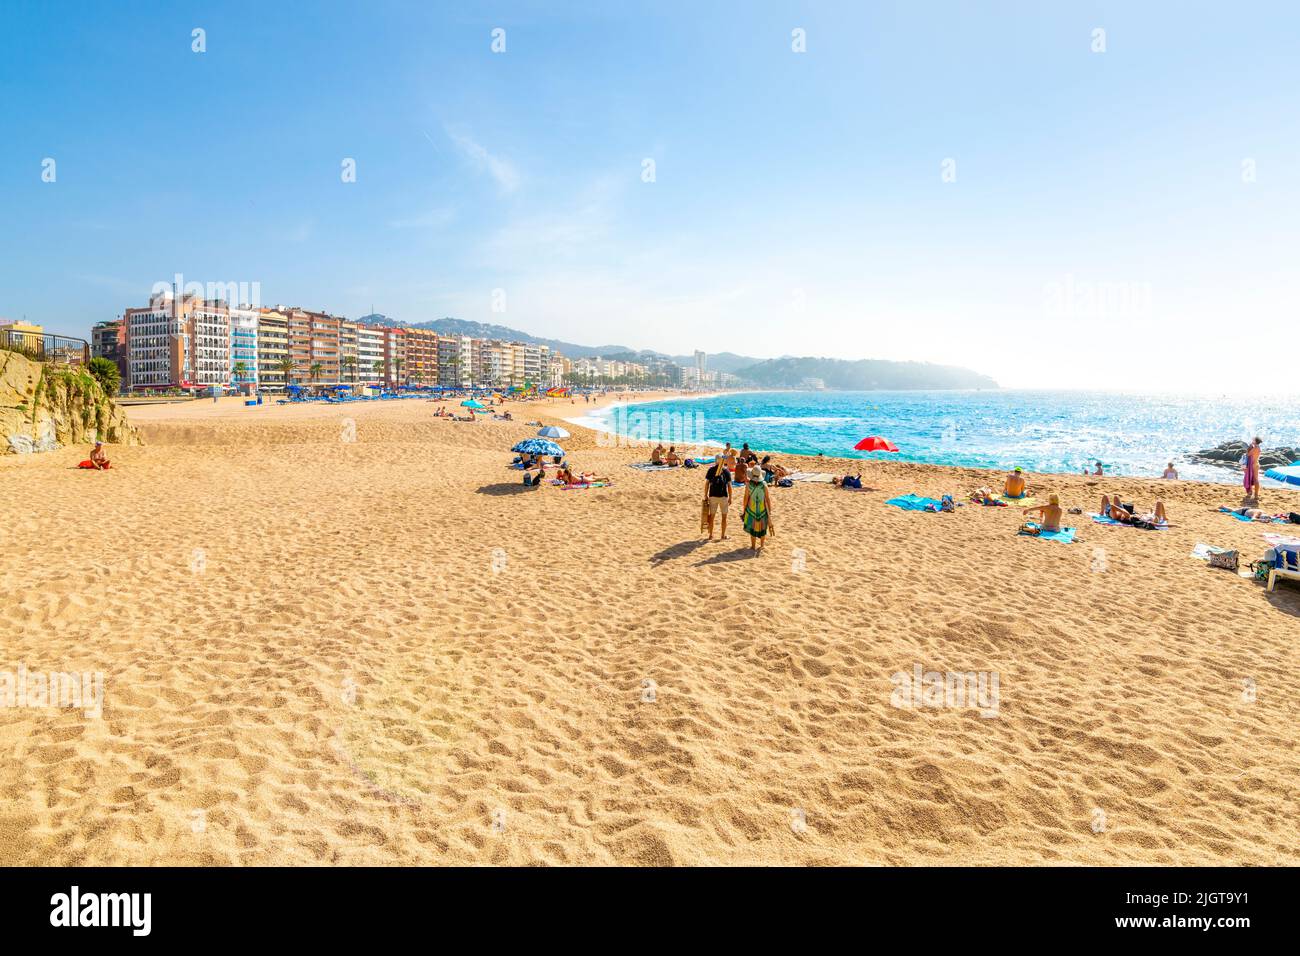 The sandy beach along the Costa Brava coast of the Mediterranean Sea at the resort town of Lloret de Mar, Spain. Stock Photo